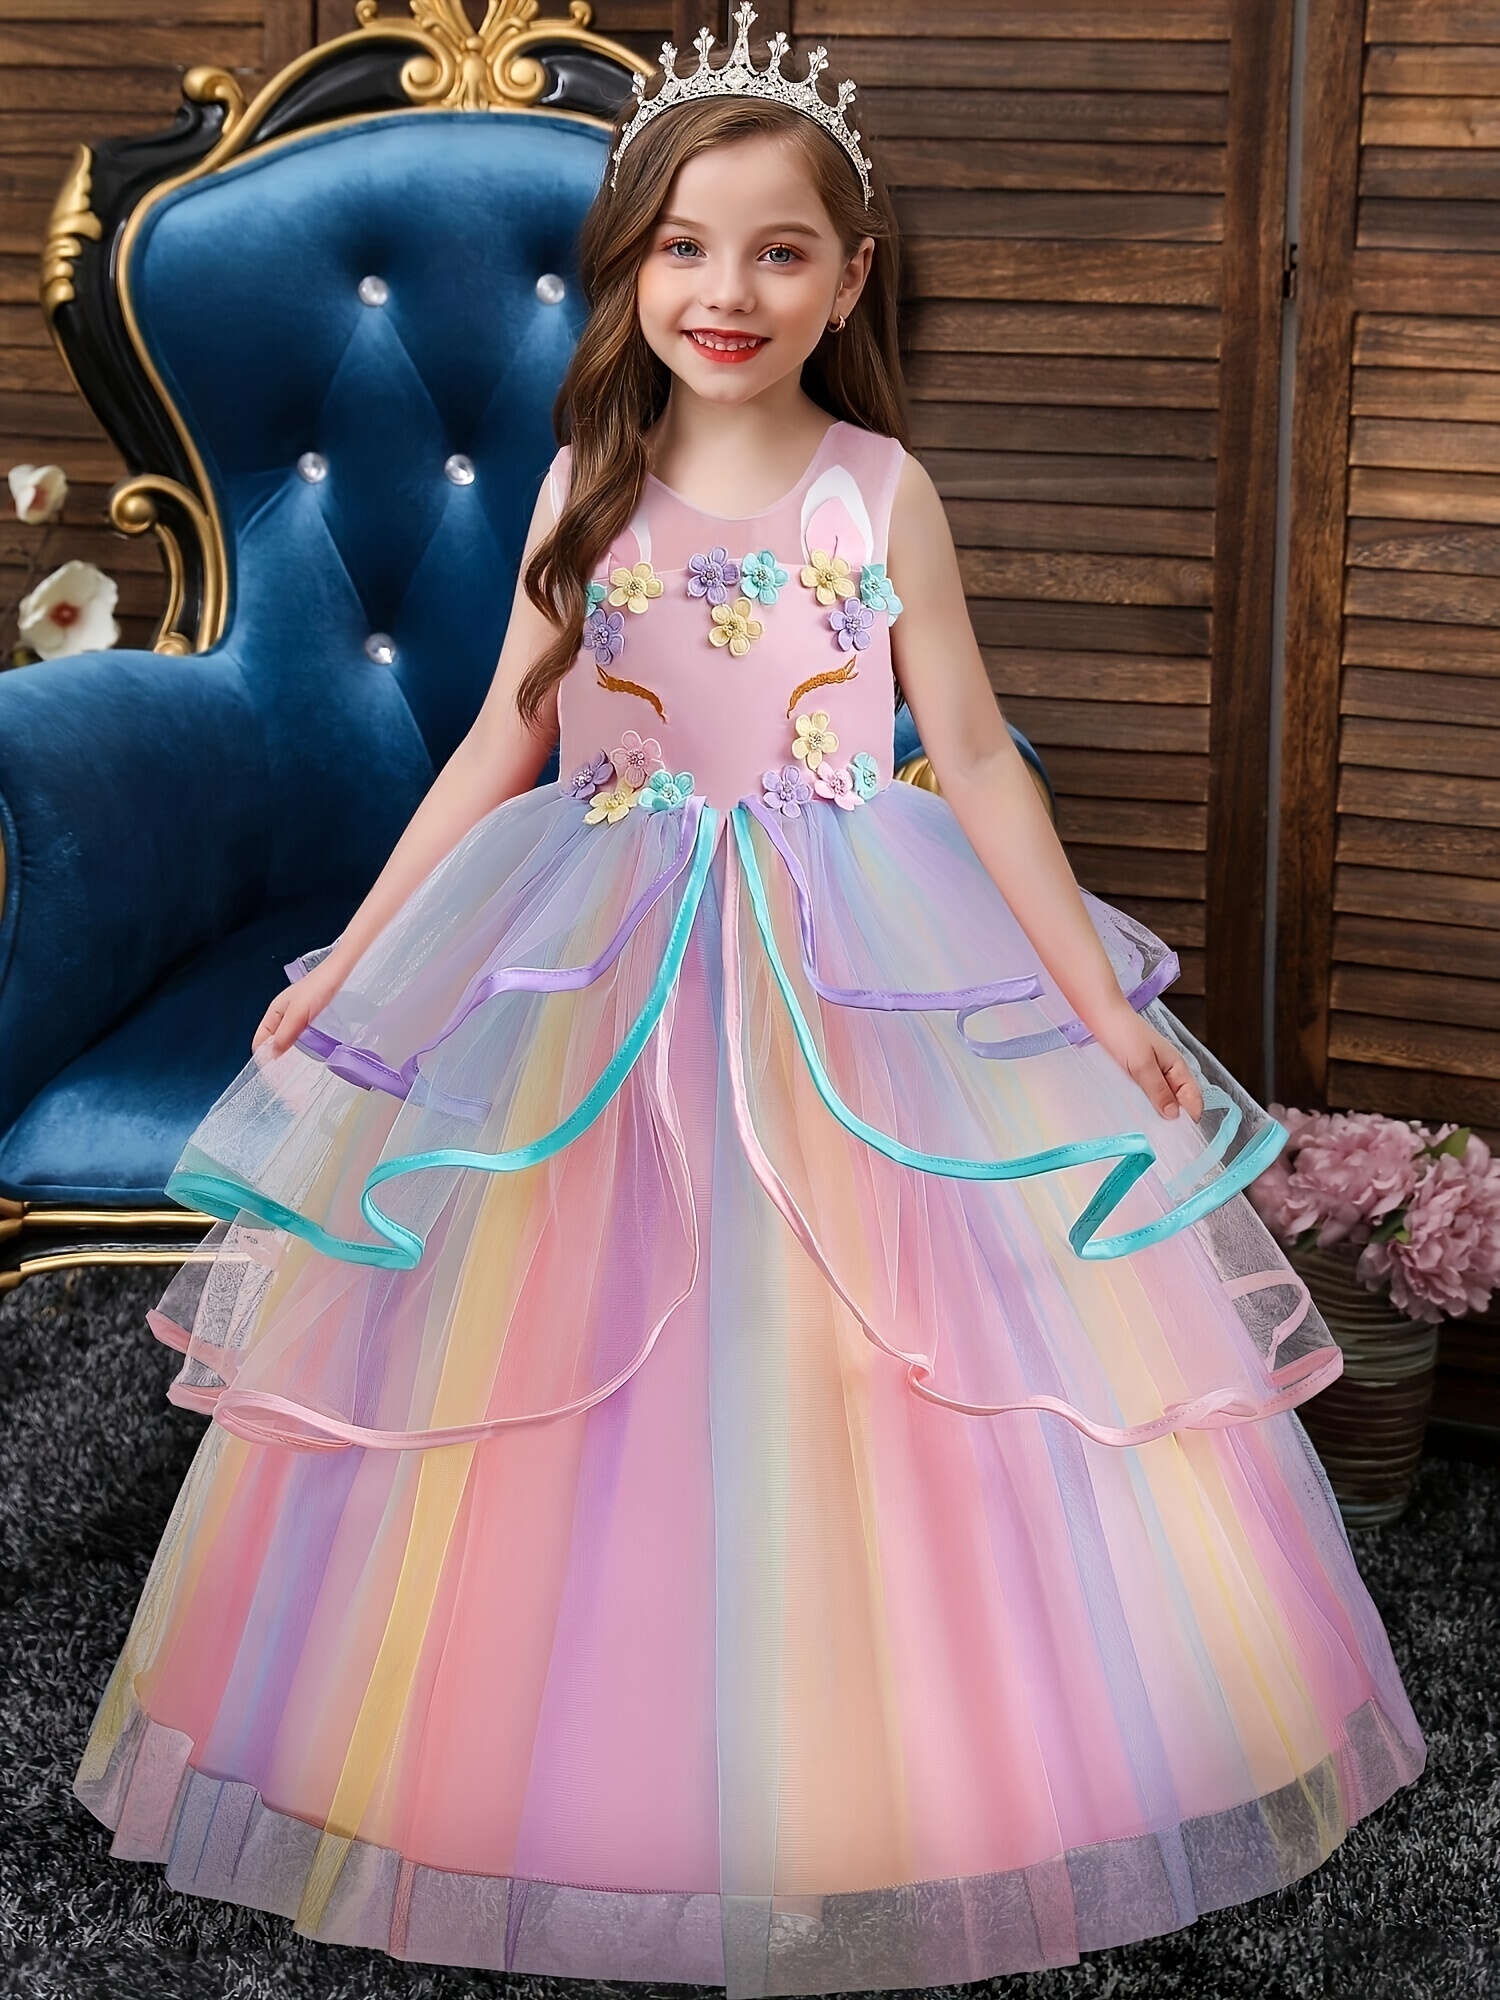 5 Yrs Old Kid Birthday Dress Party with Unicorn Print, Girl Unicorn Dress  Party